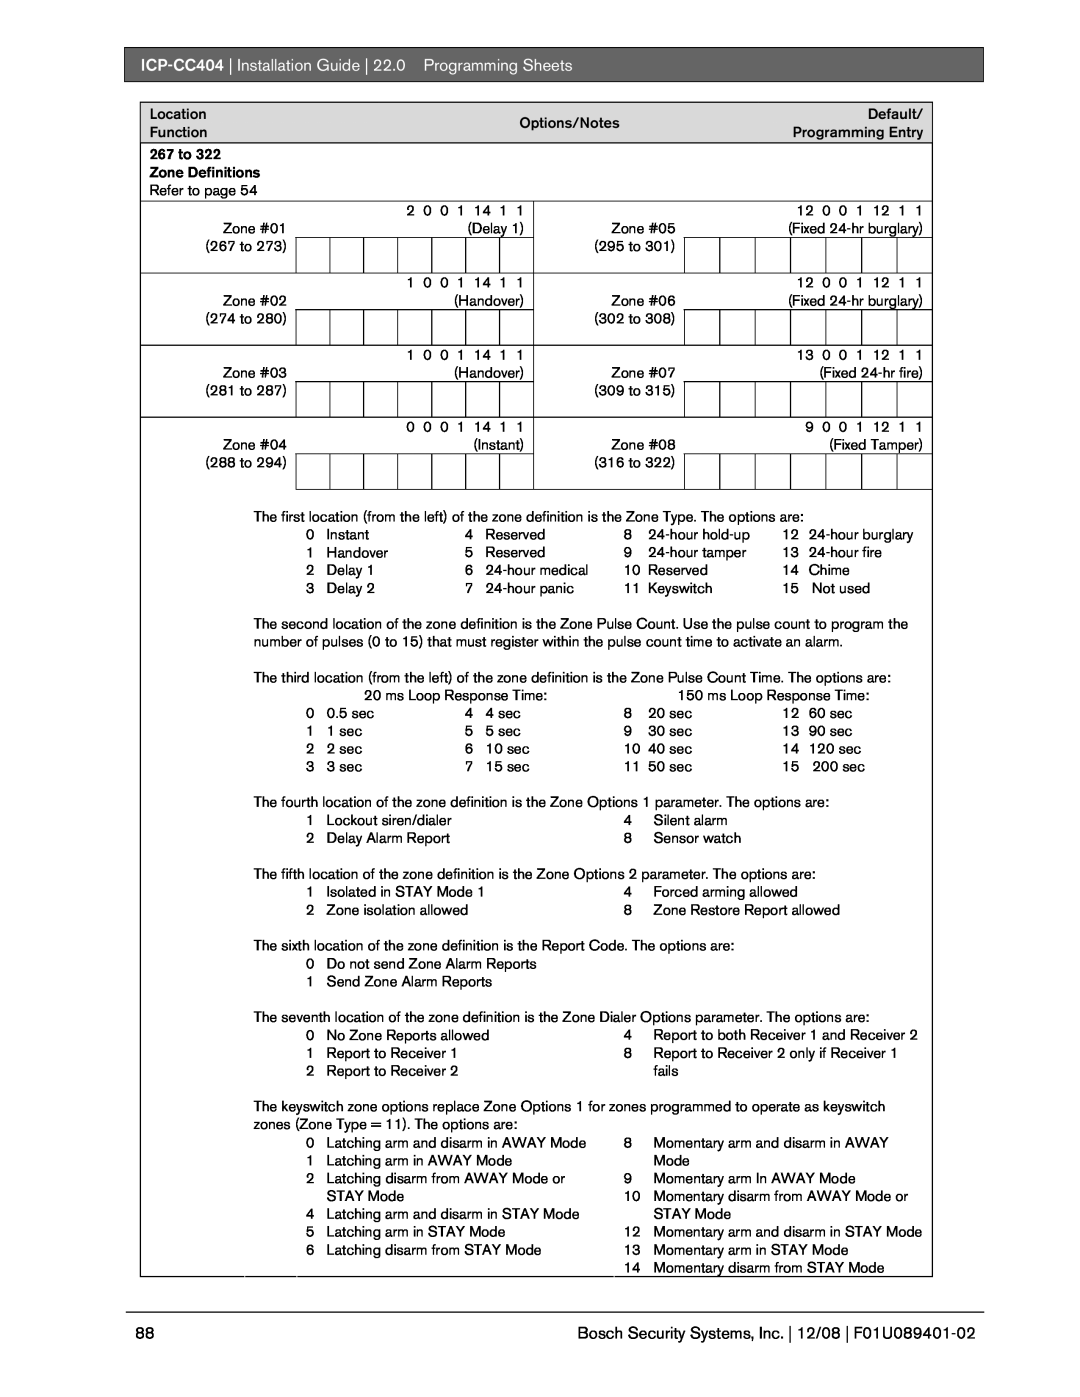 Bosch Appliances manual 22.0, ICP-CC404| Installation Guide, Programming Sheets, Location 